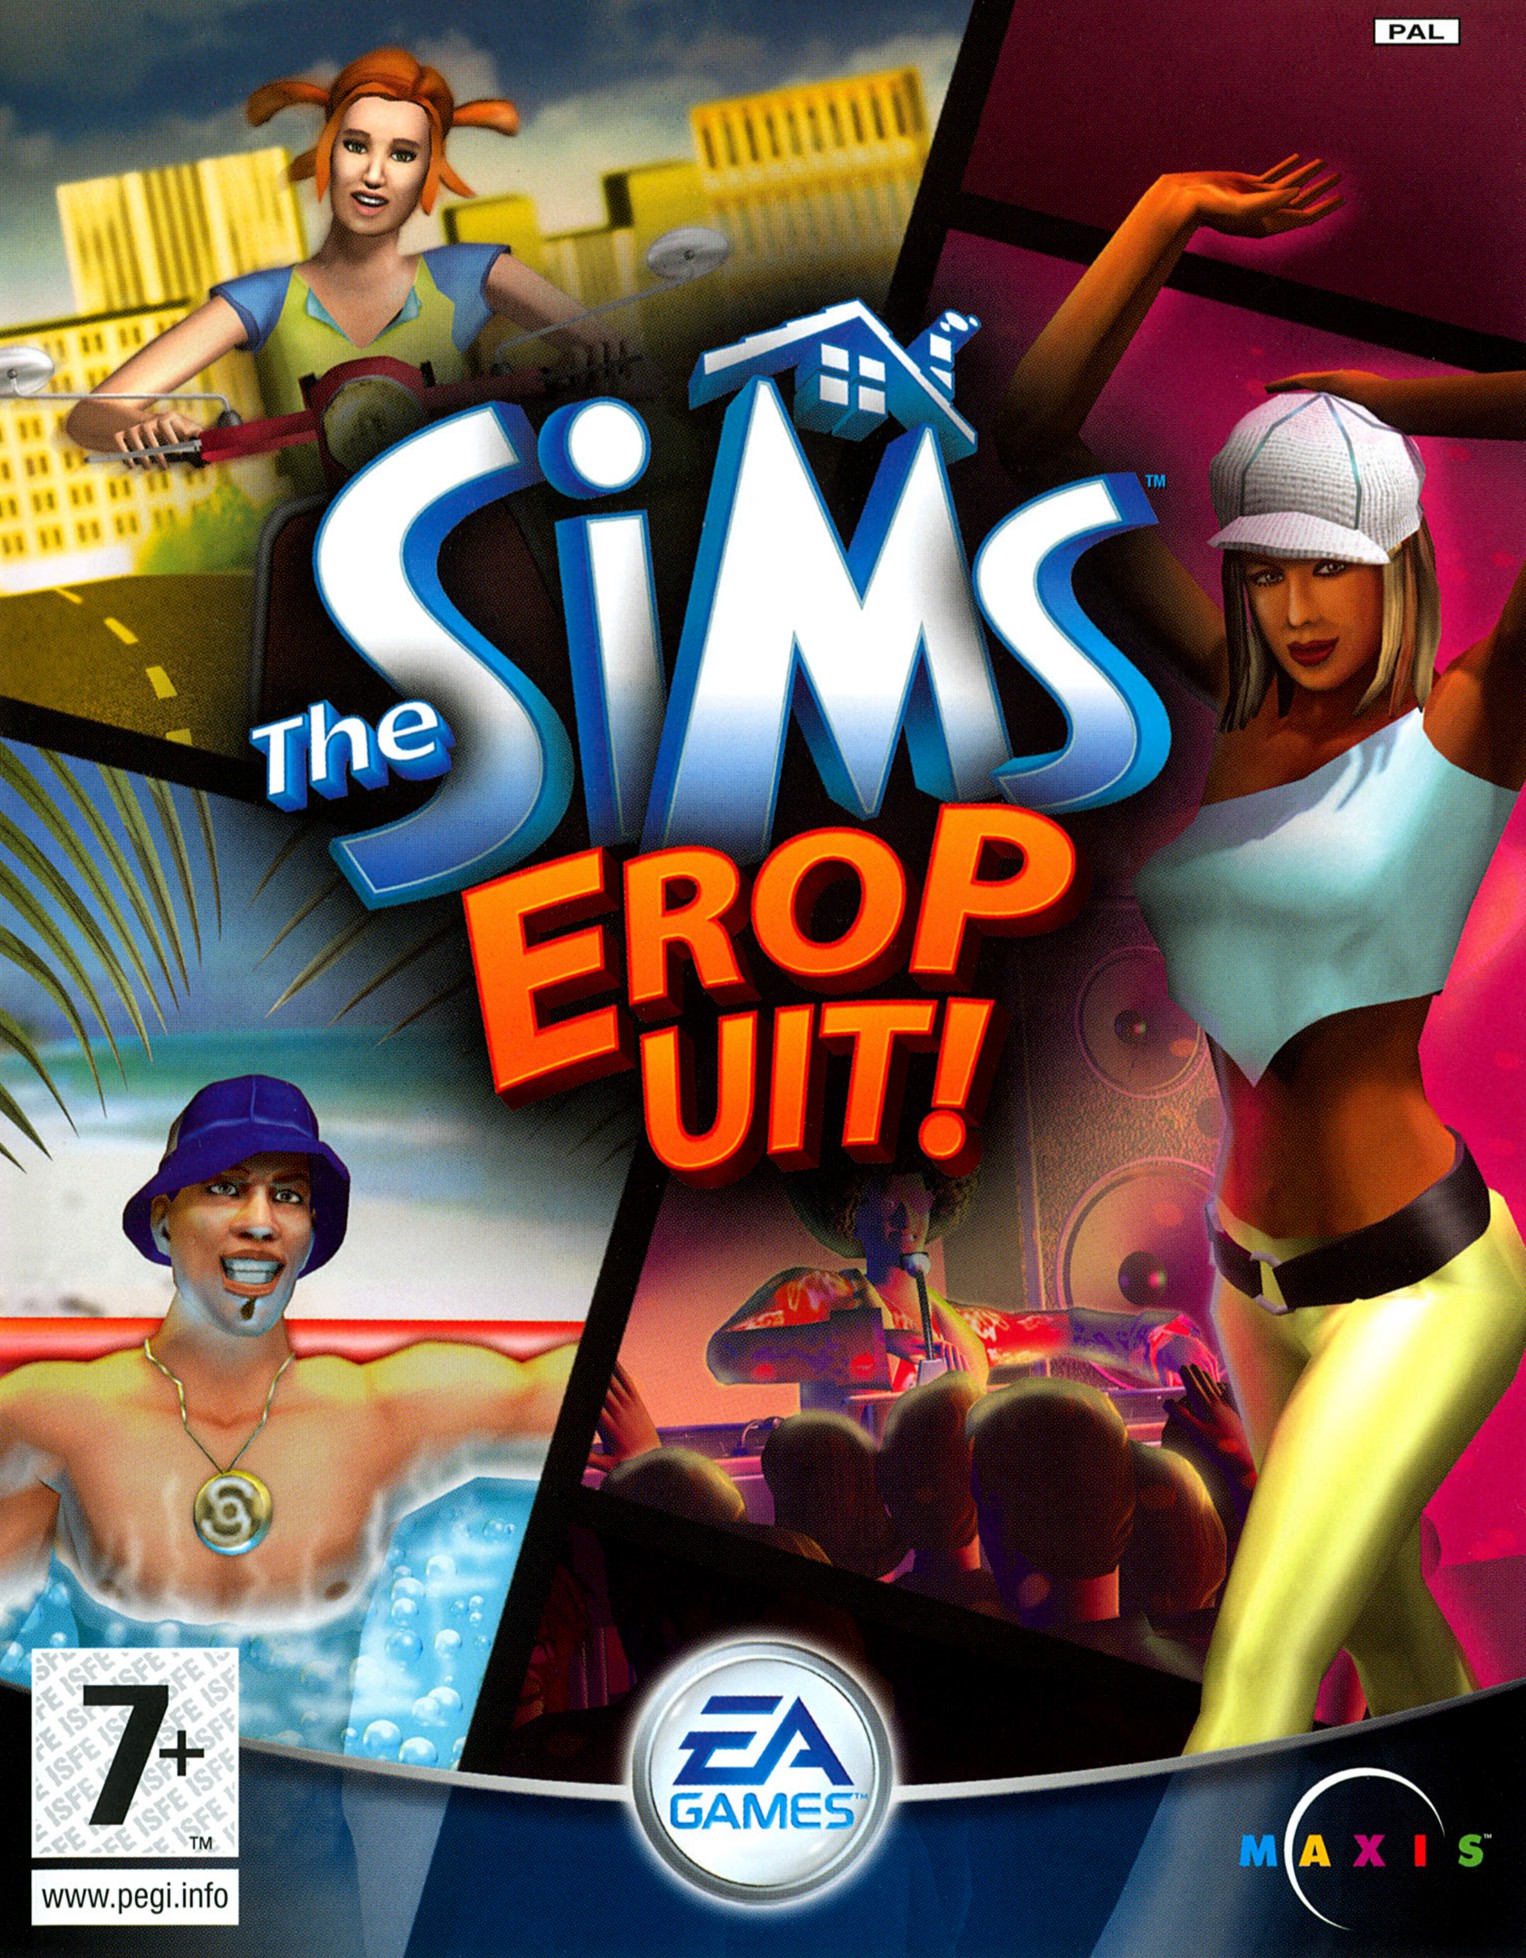 The Sims Erop Uit! Kopen | Playstation 2 Games